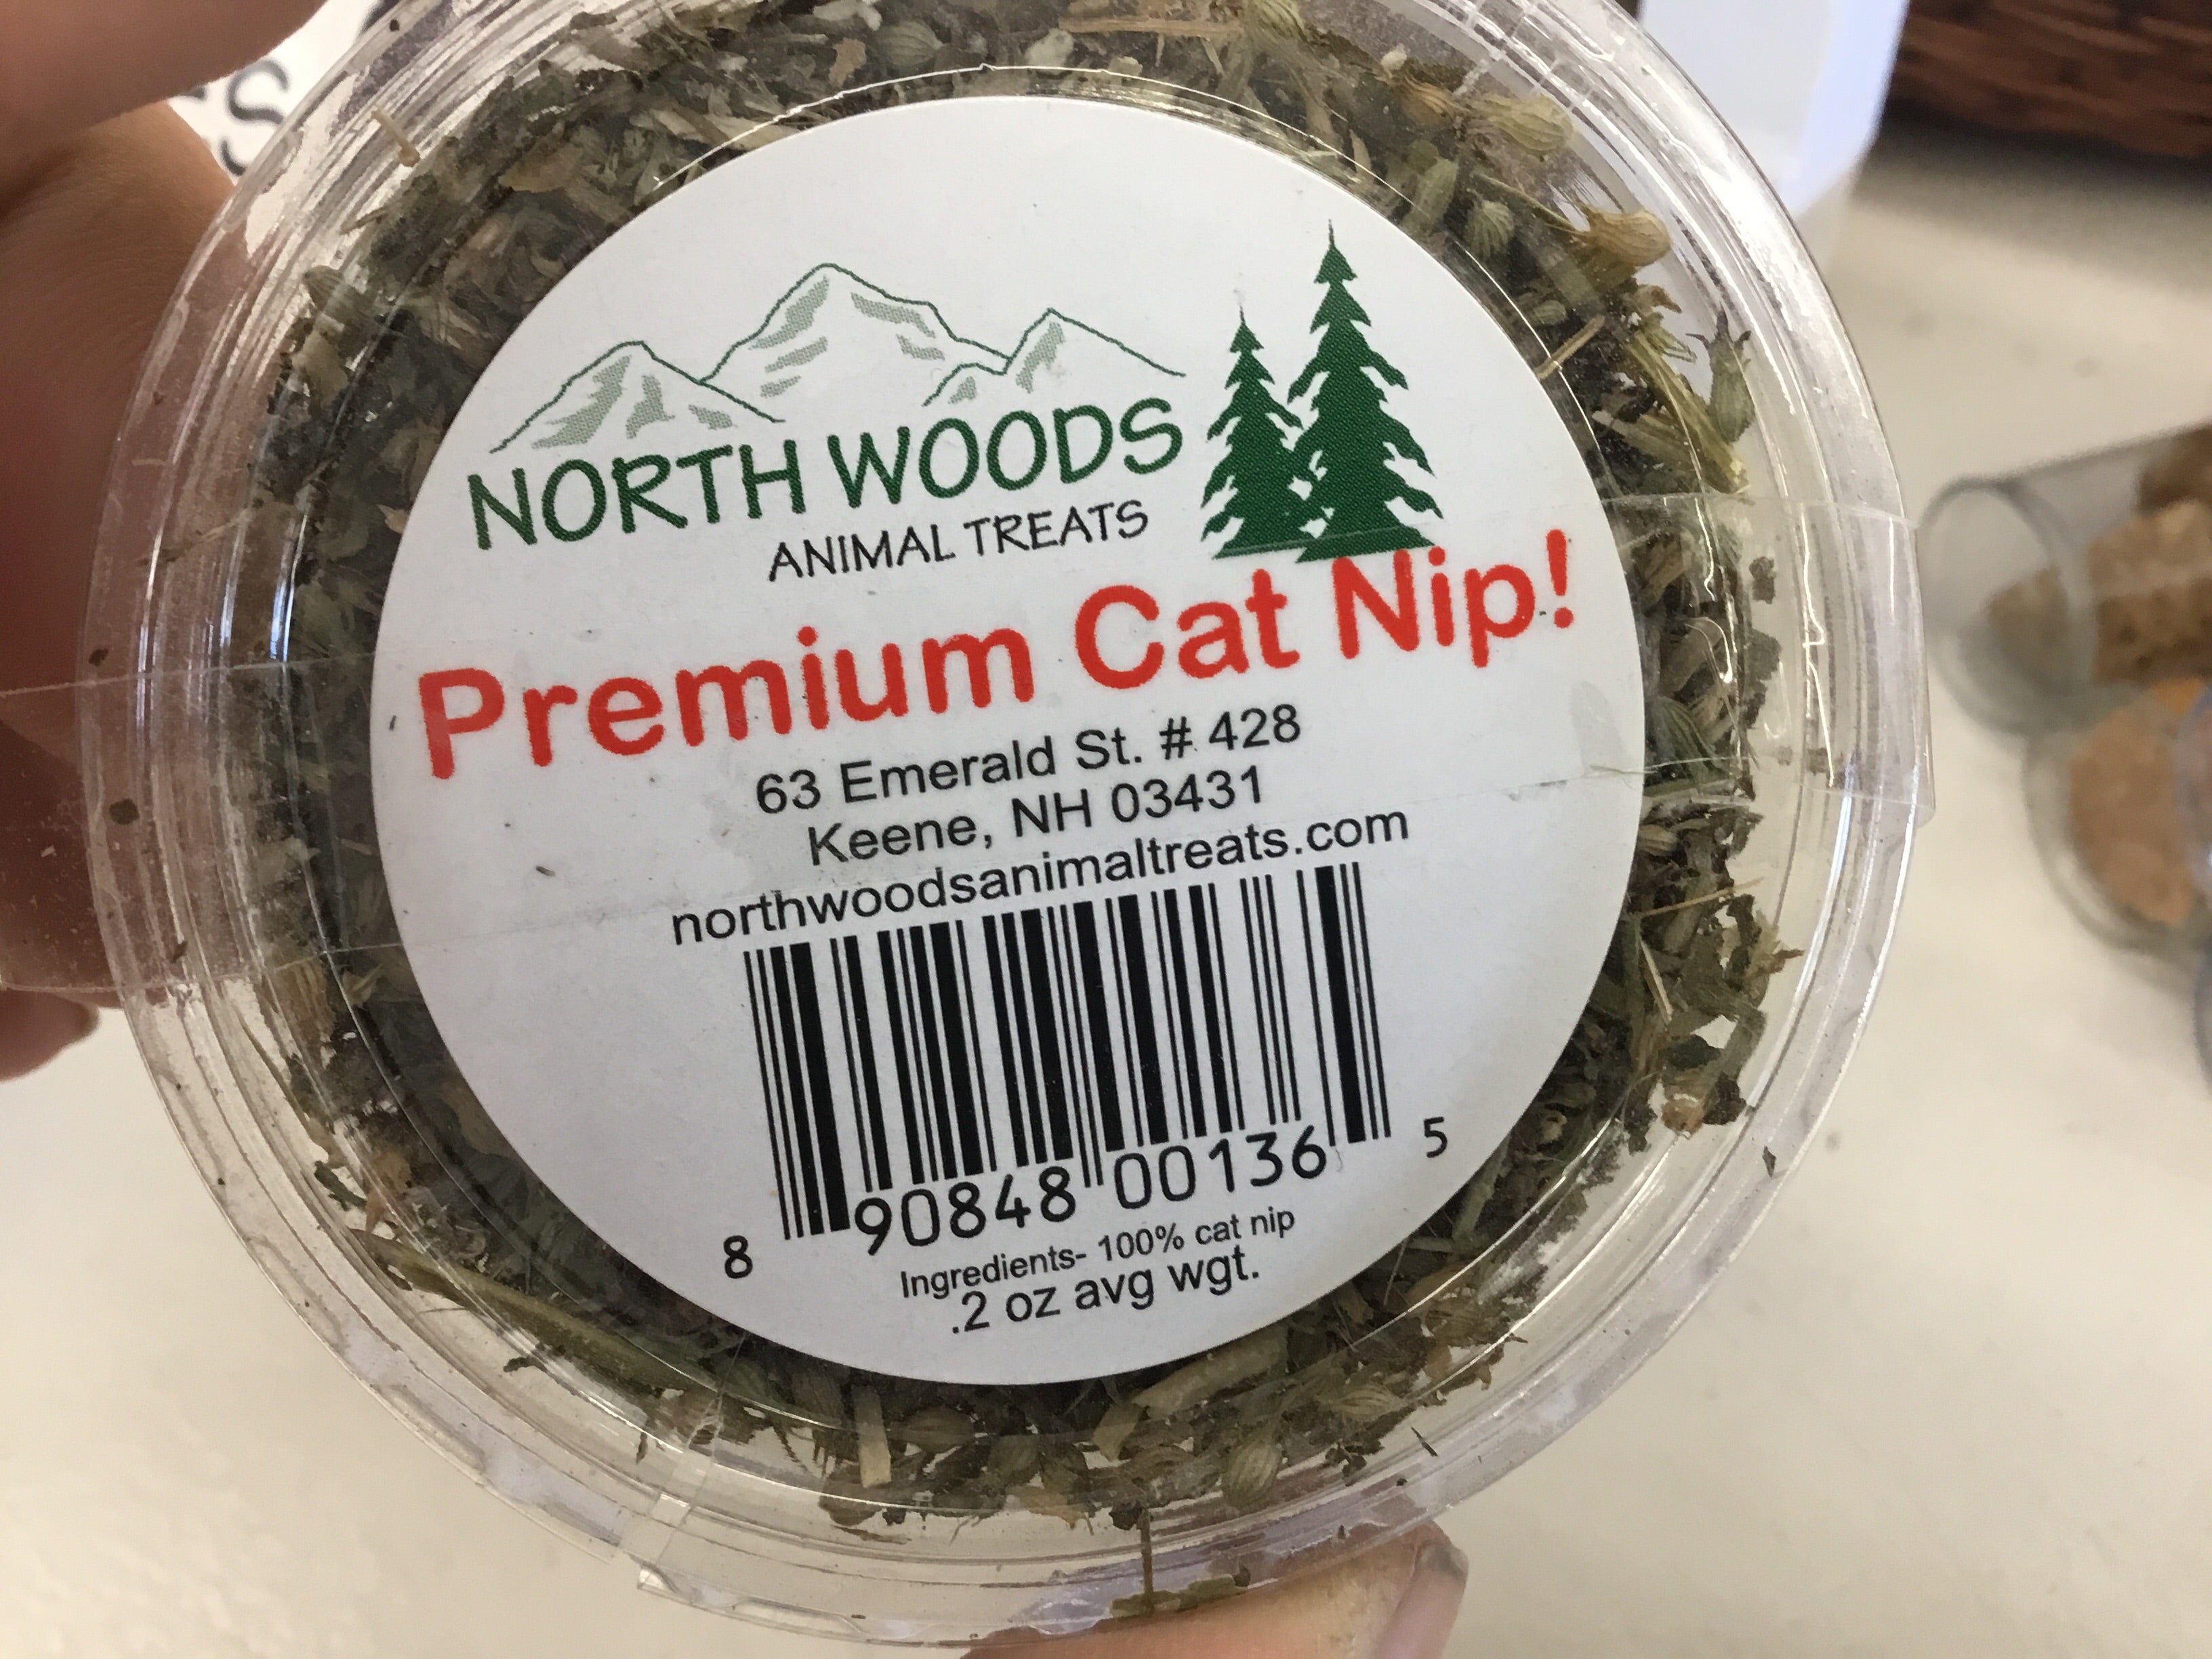 North Woods Animal Treats: Cat Nip